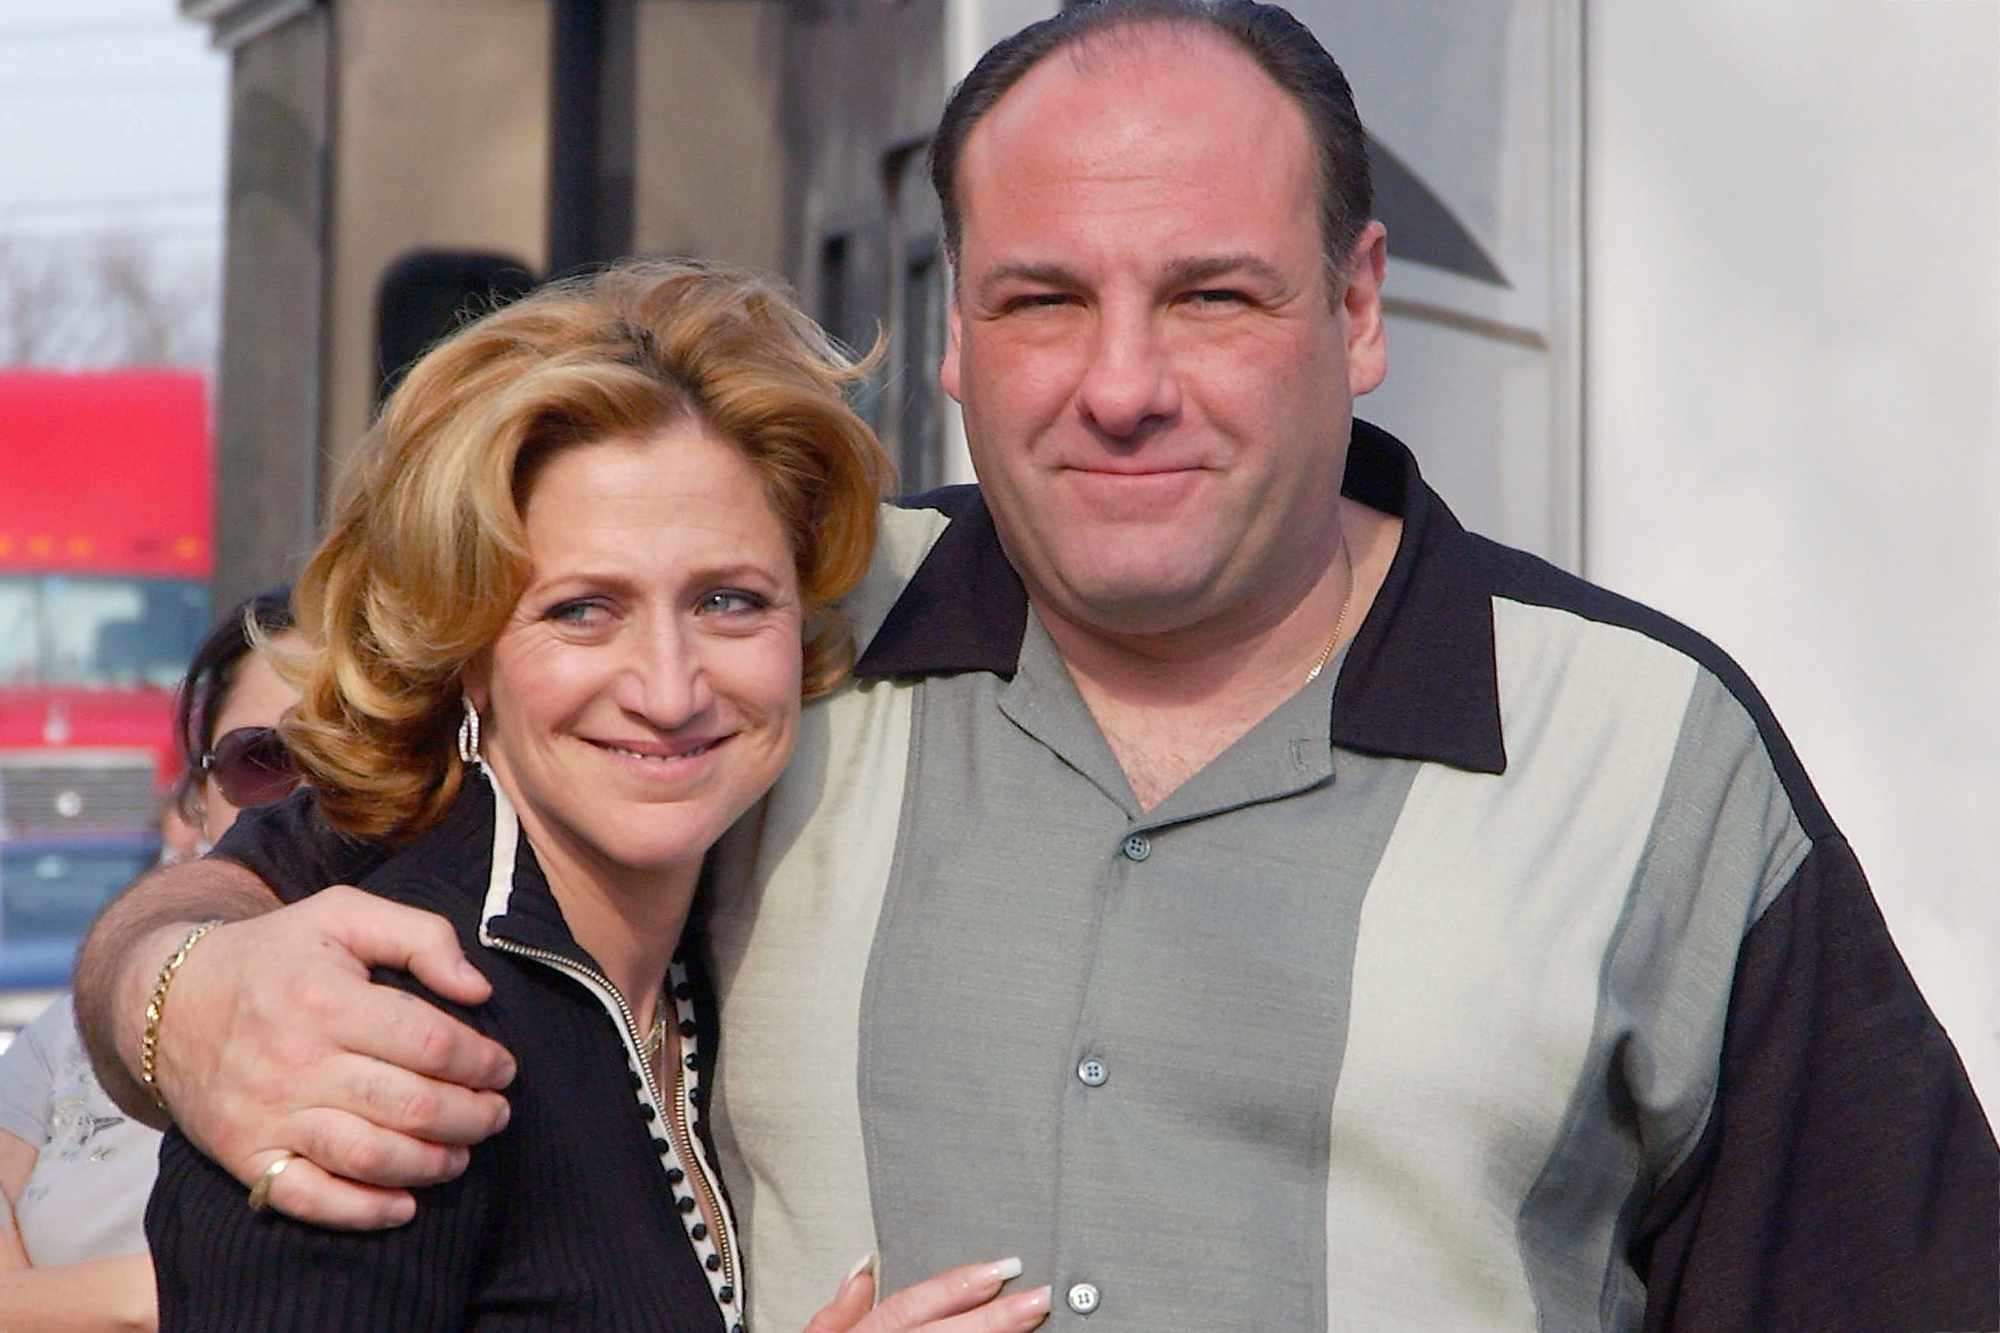 Carmela Soprano, one of the inspirations of TikTok's "Mob Wife" aesthetic, in a scene with Tony Soprano